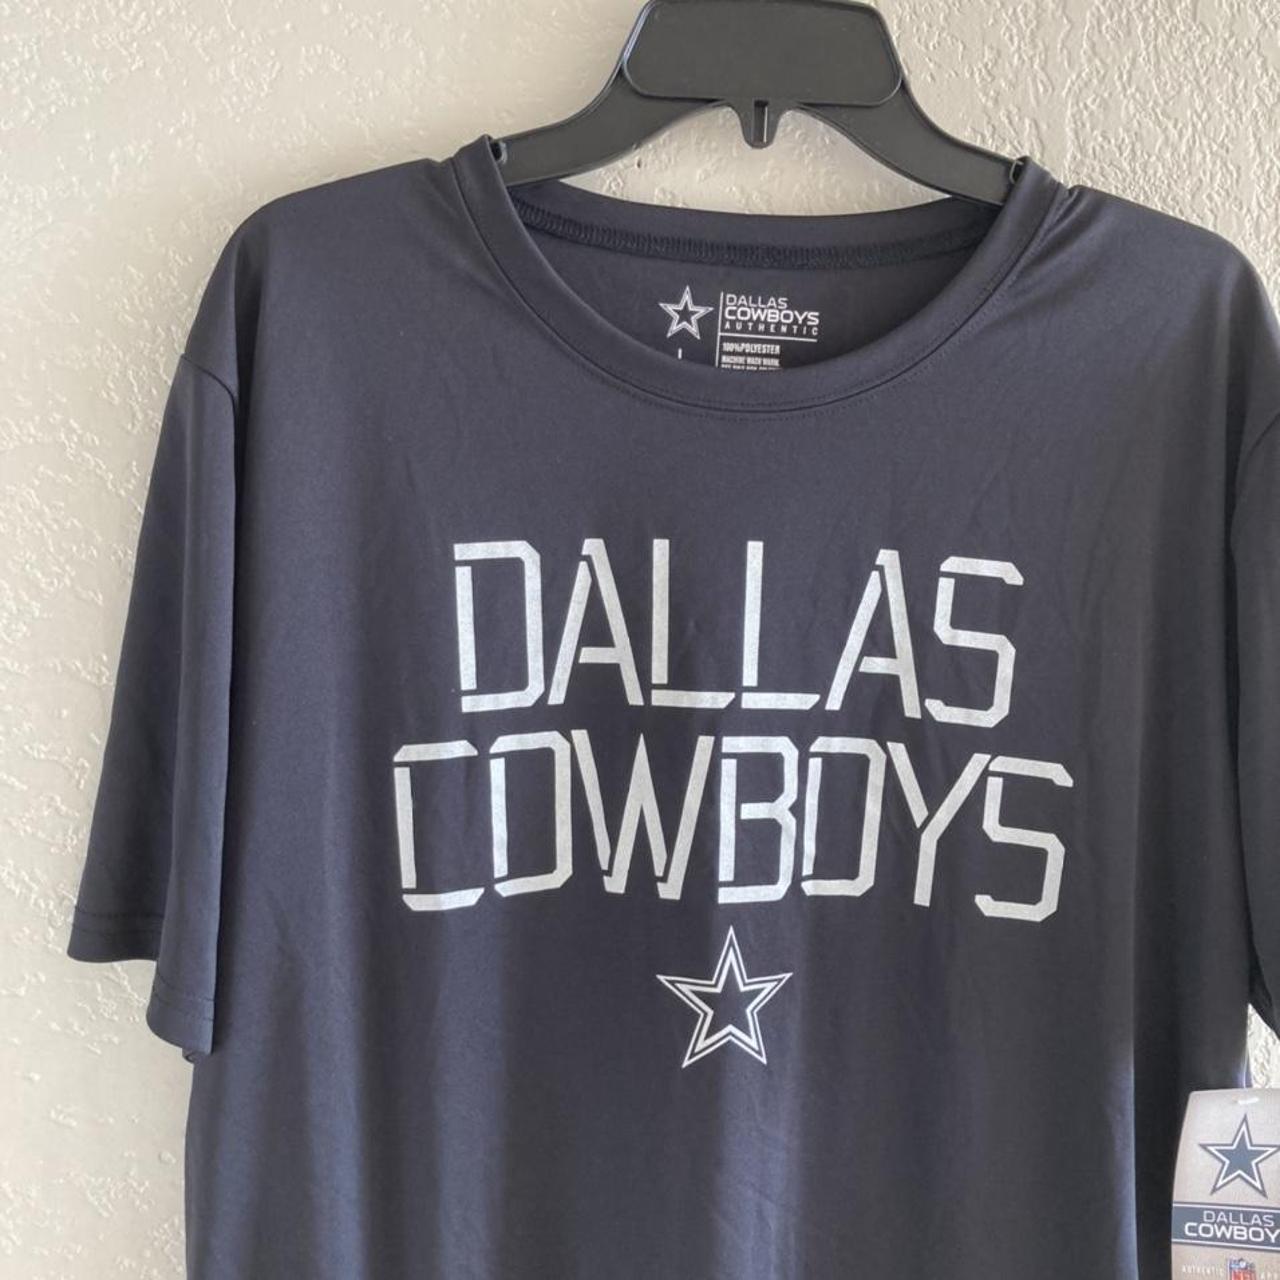 Product Image 2 - Dallas Cowboys Authentic Tee Shirt
Black
Men’s
Size